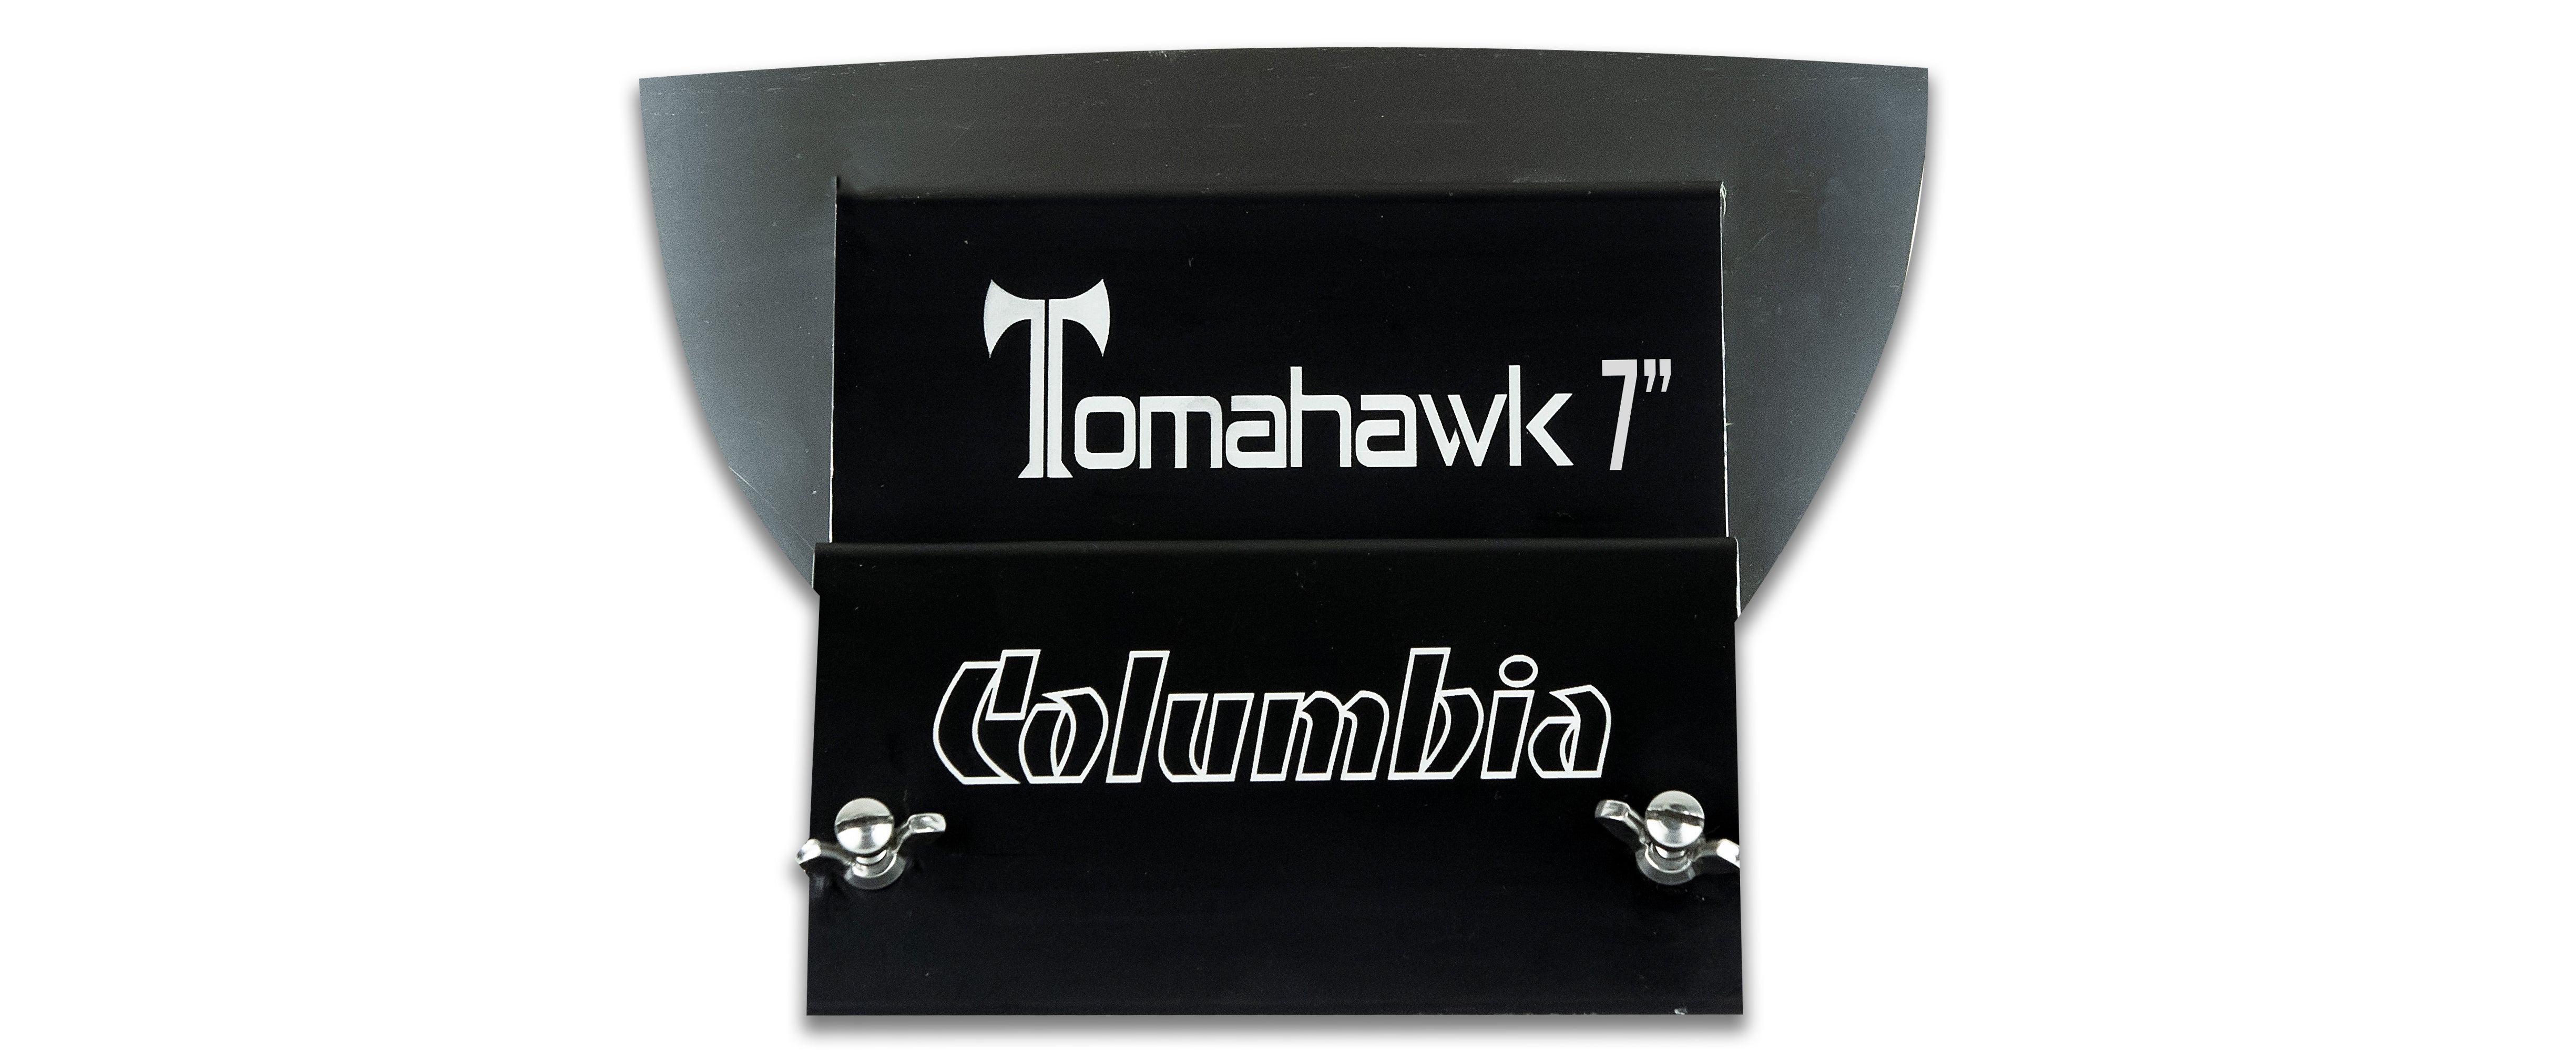 Columbia Tomahawk Warrior Set